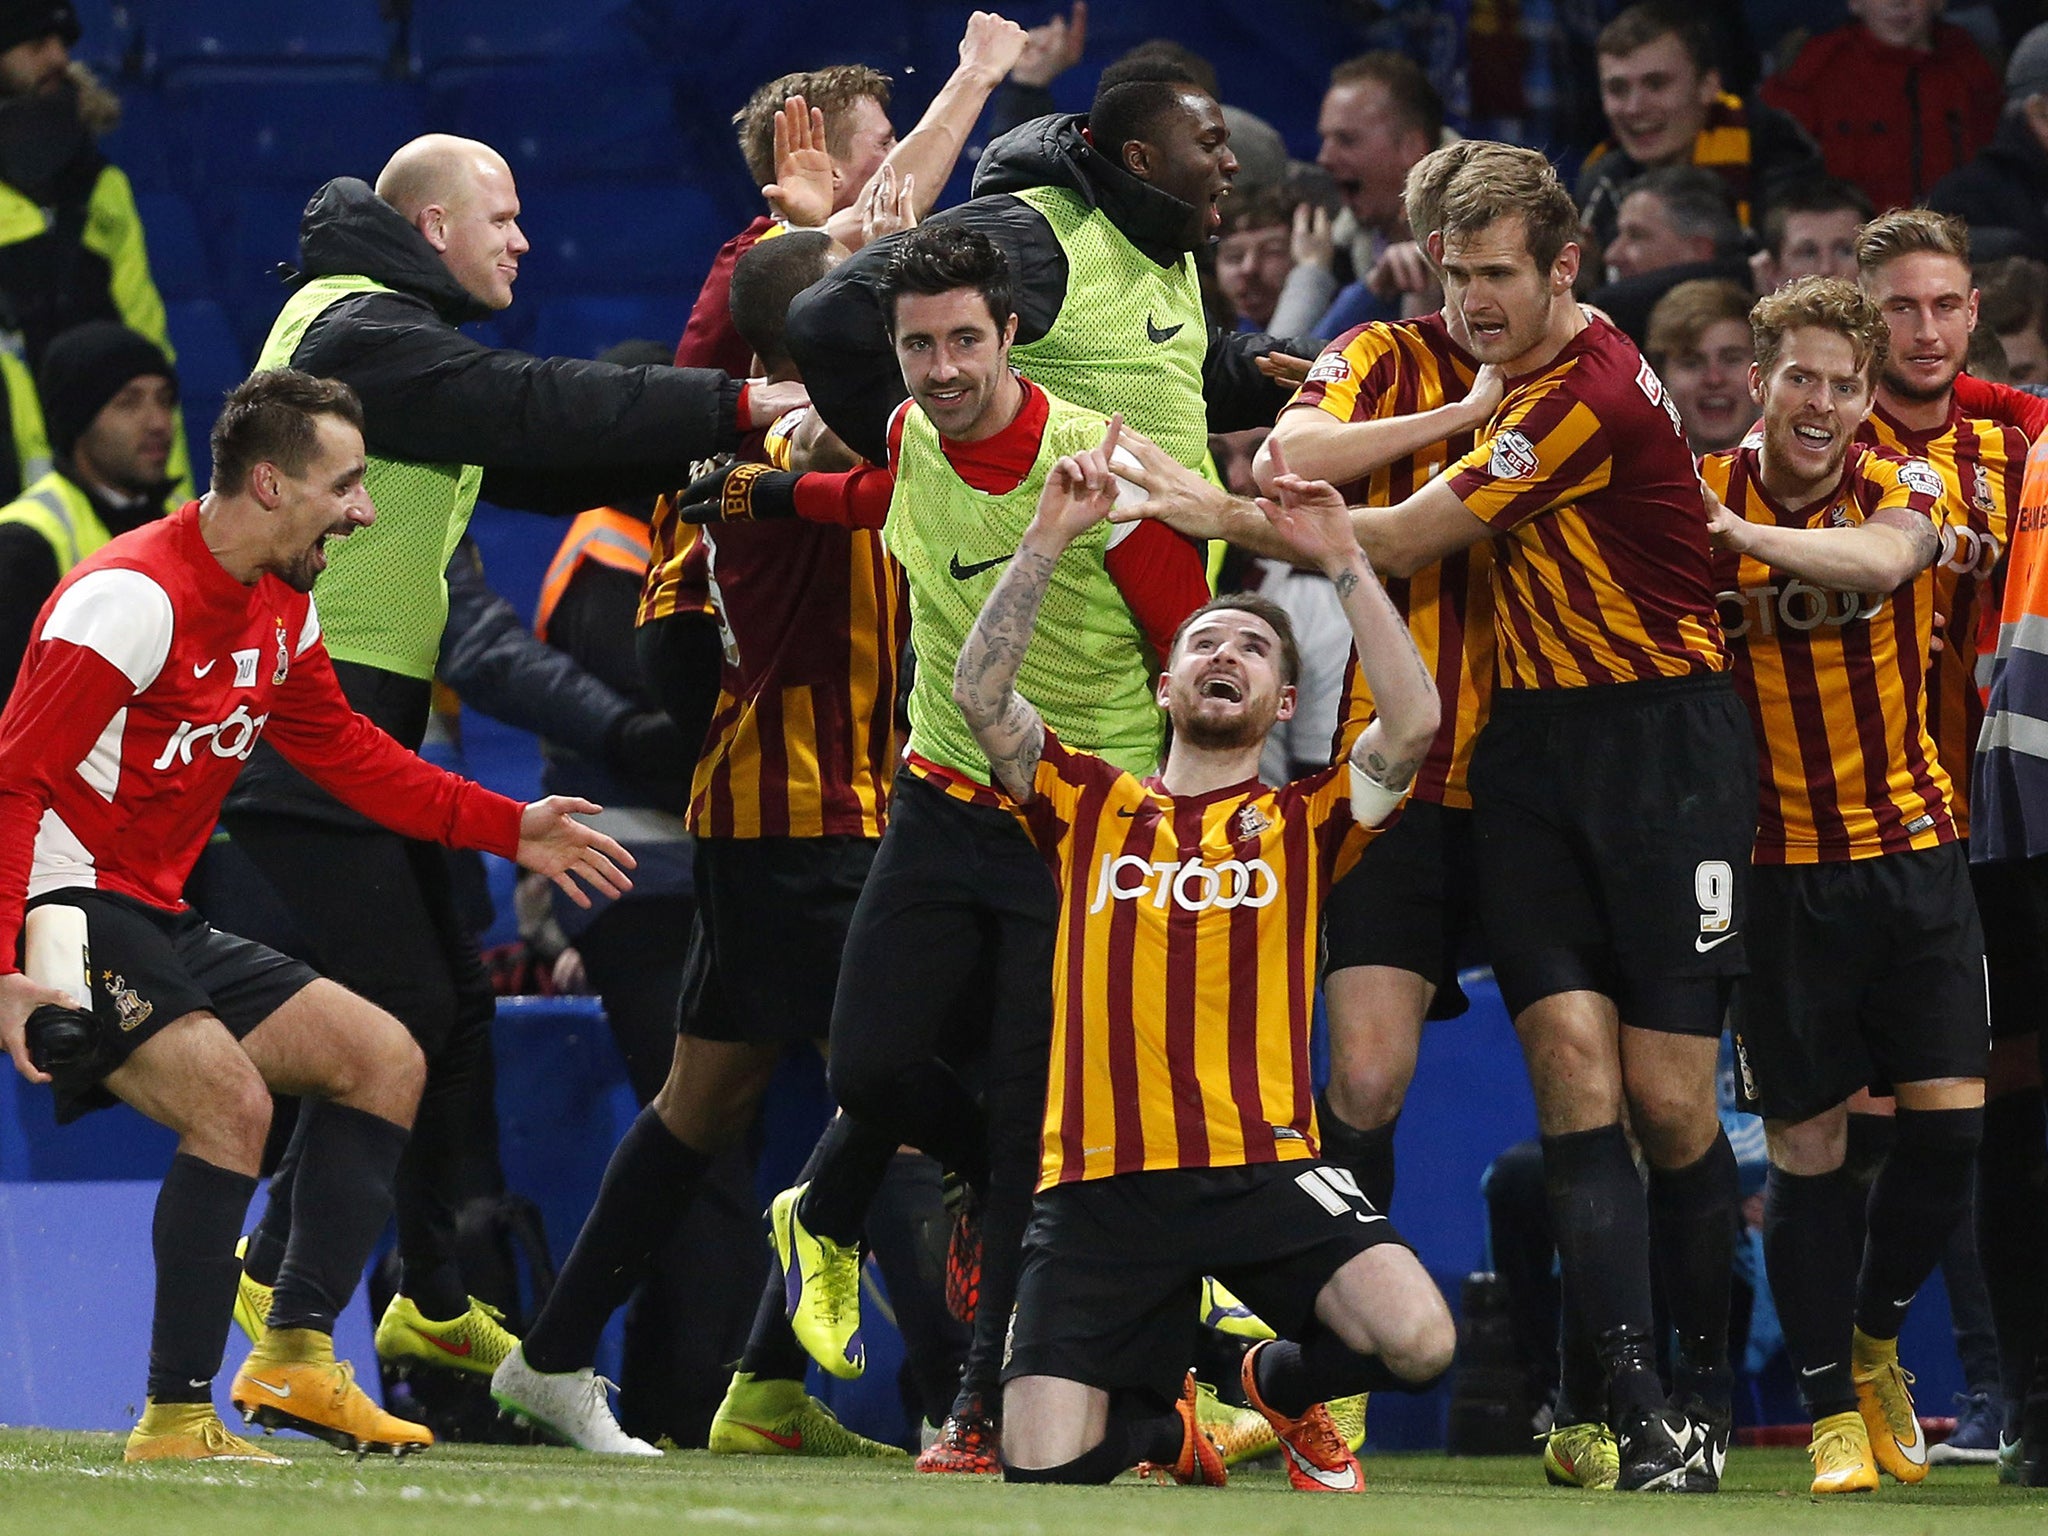 Bradford City players celebrate at Stamford Bridge